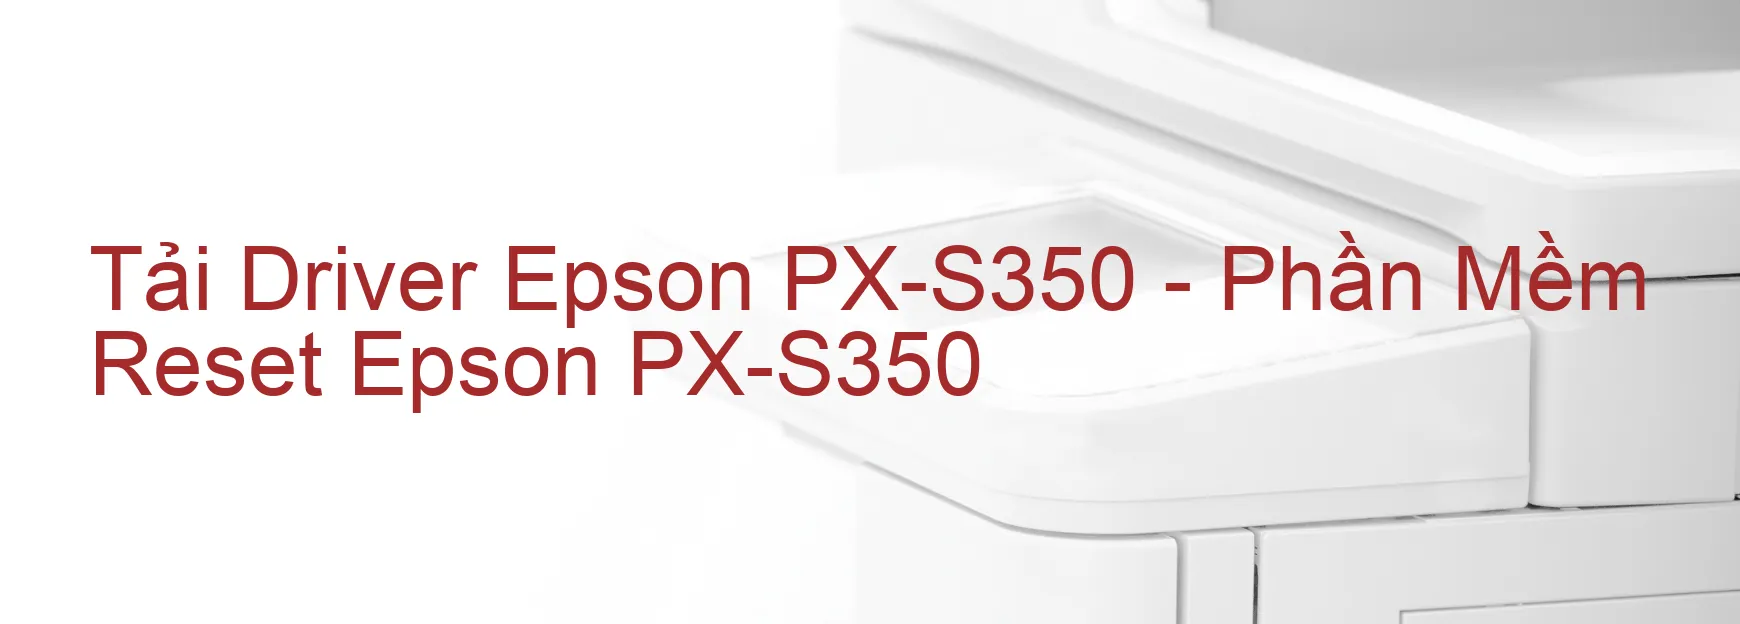 Driver Epson PX-S350, Phần Mềm Reset Epson PX-S350